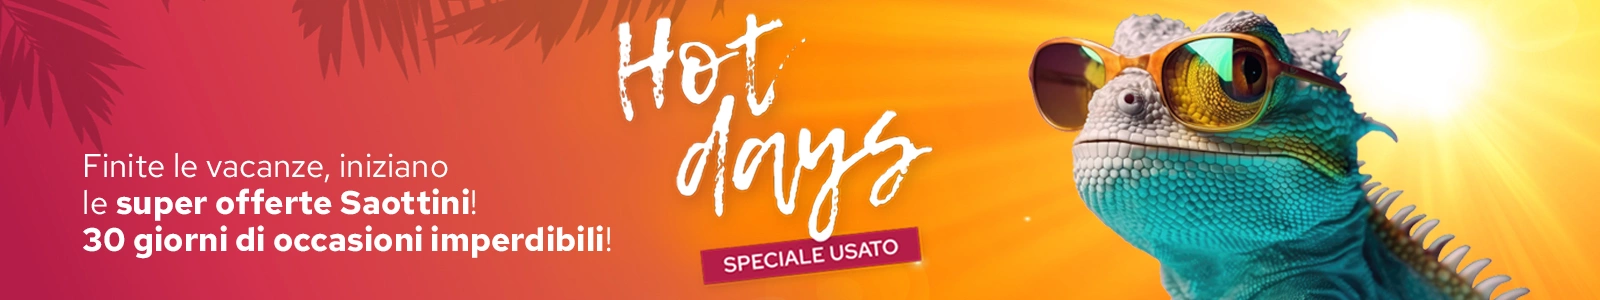 Hot-Days Saottini